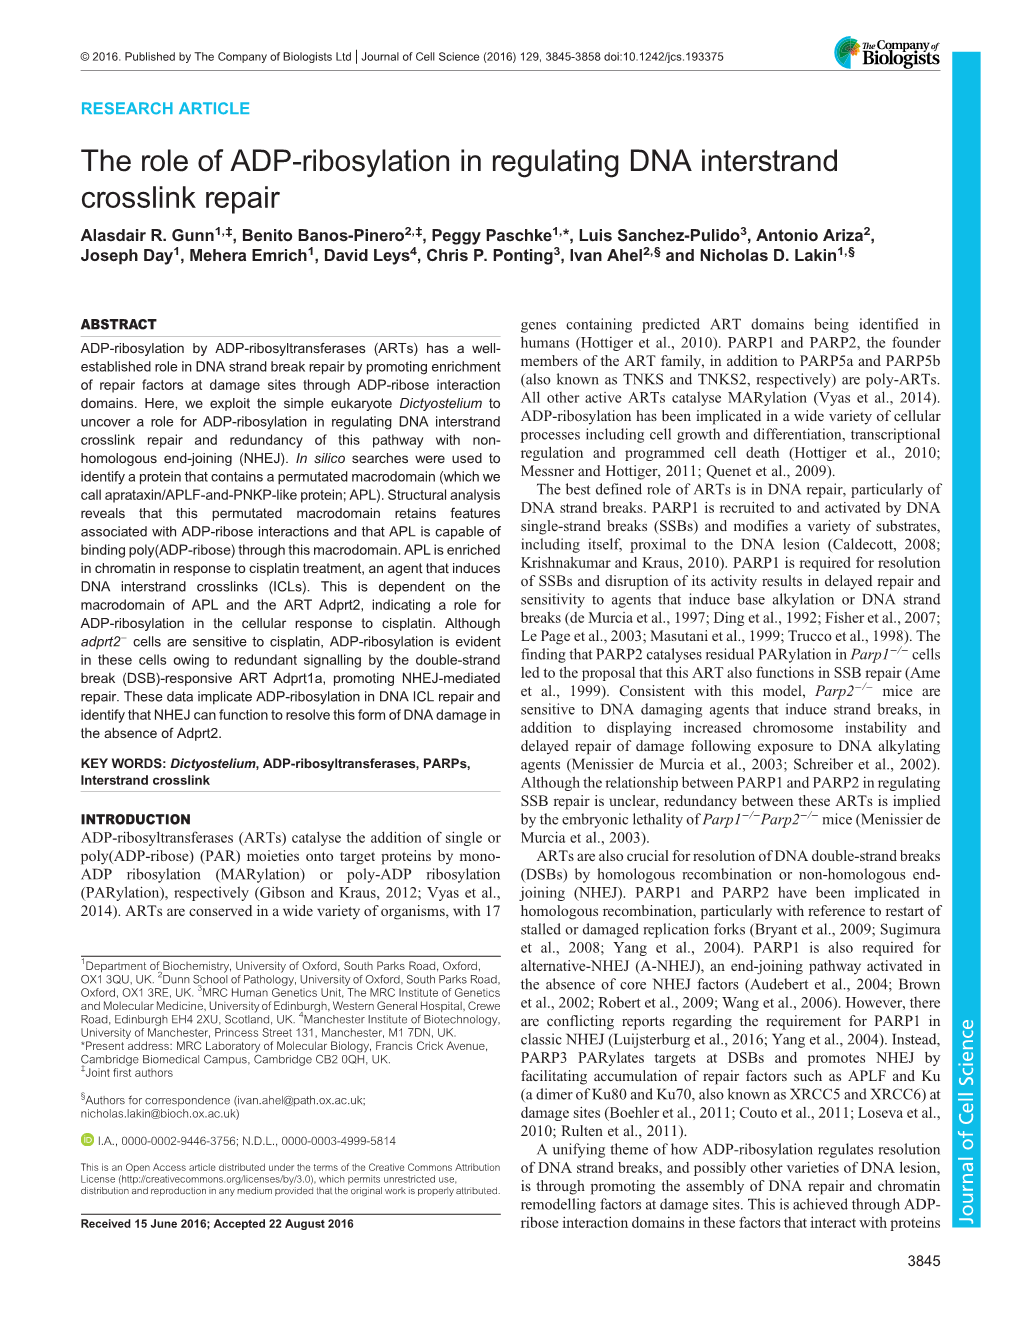 The Role of ADP-Ribosylation in Regulating DNA Interstrand Crosslink Repair Alasdair R